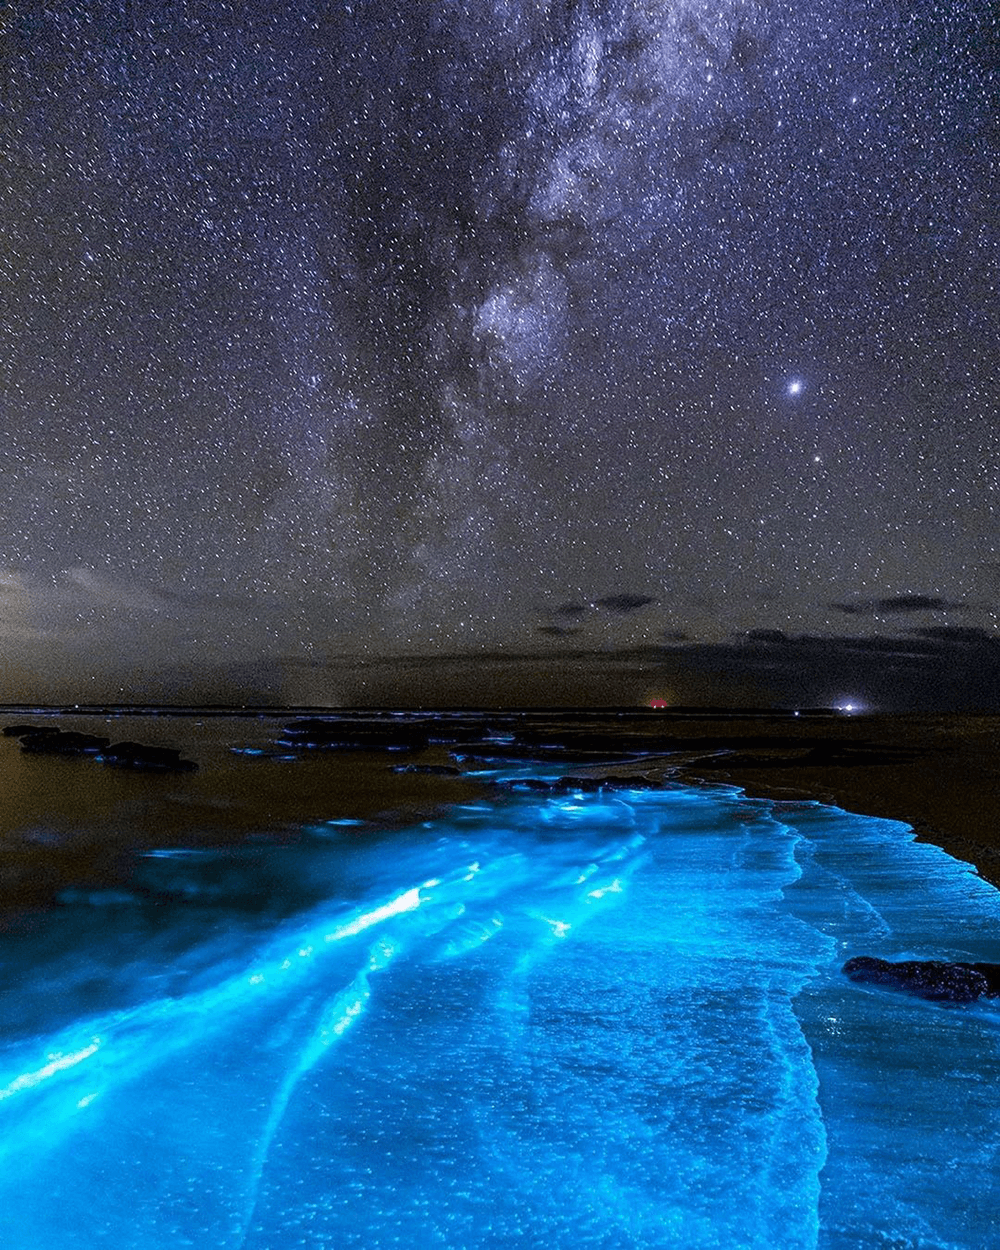 Image of bioluminescent algae taken on Anzac Day 2020 by @jordan_robins